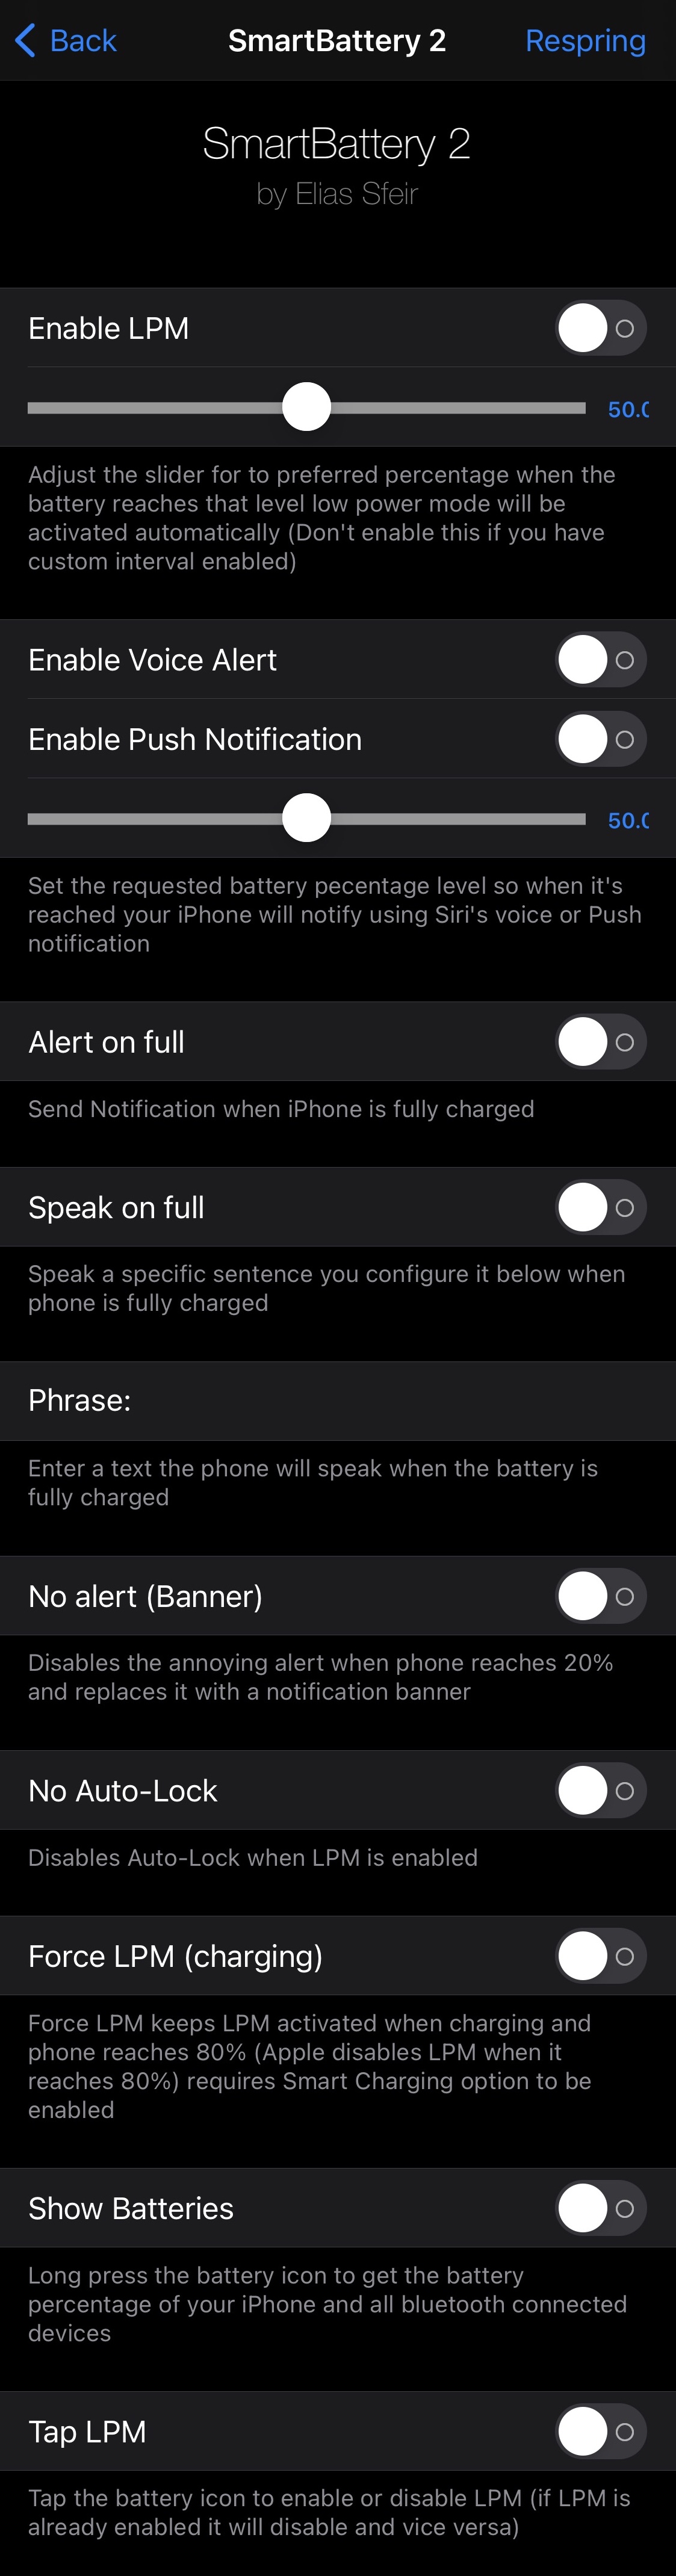 SmartBattery iOS 15 global settings preference pane.